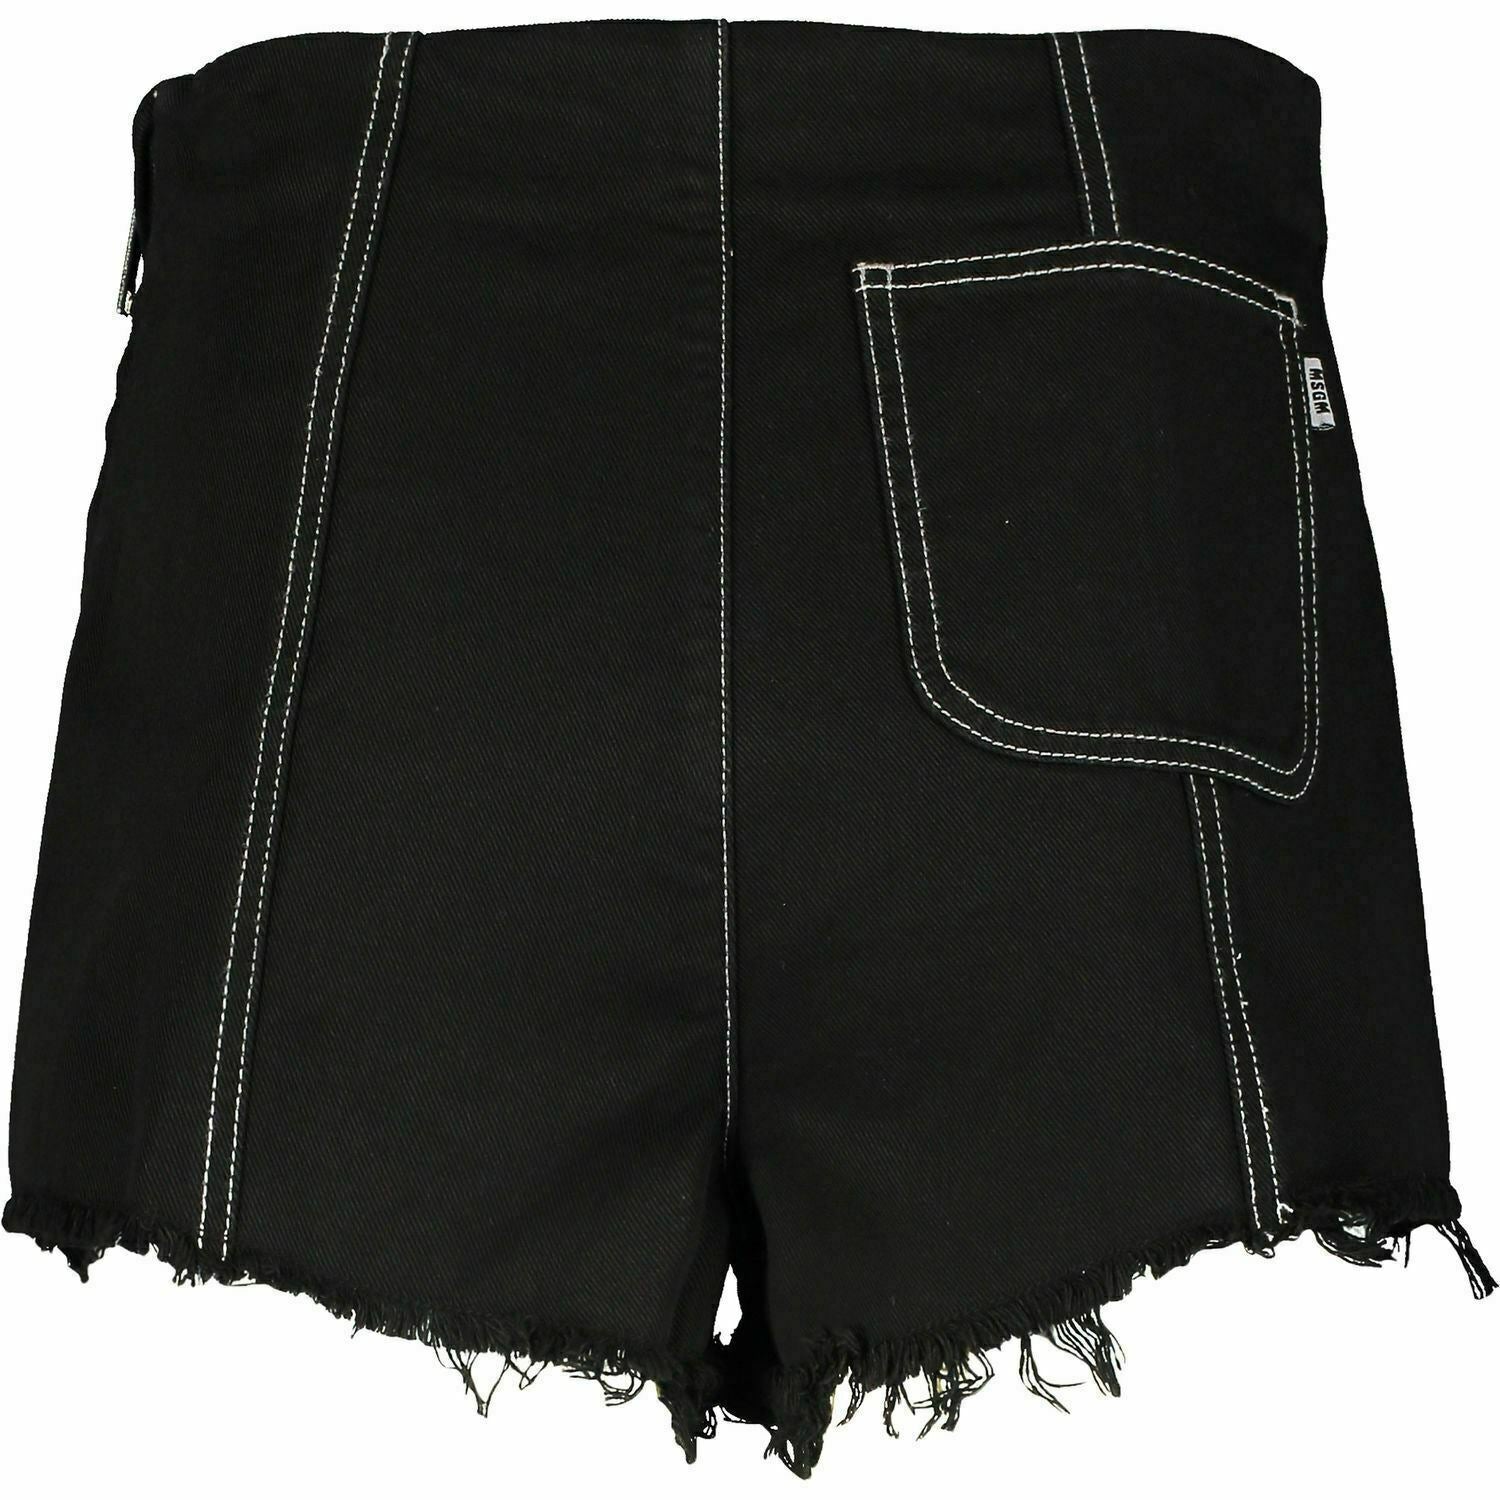 MSGM Women's High Waisted Denim Shorts, Black, size UK 6 / IT 38